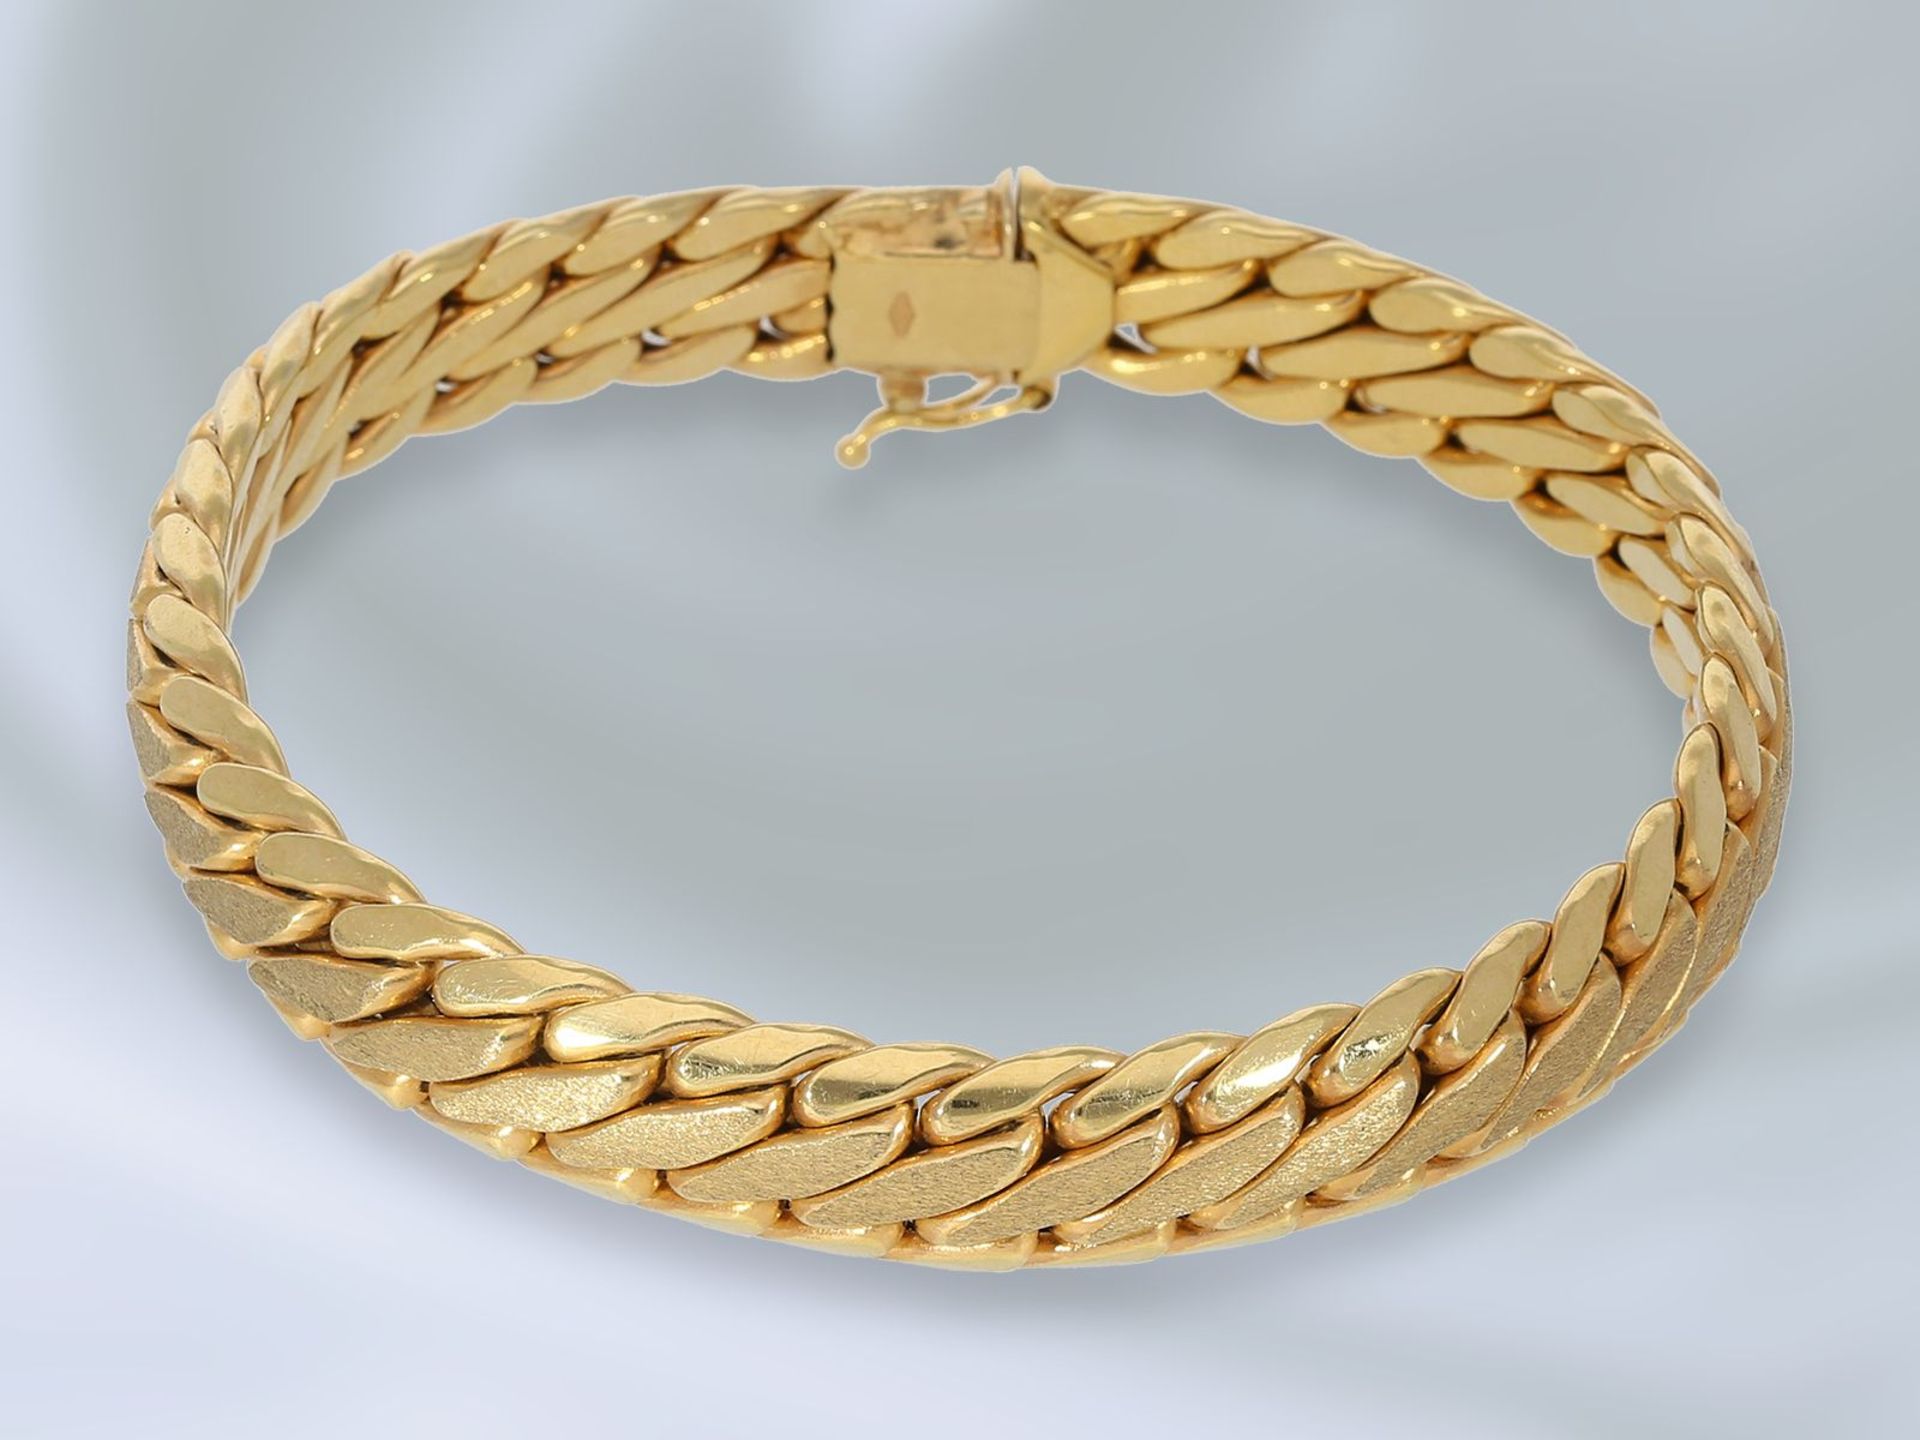 Armband: dekorativ gestaltetes Armband, gefertigt in 14K Gold, vintage GoldschmiedearbeitCa. 19cm